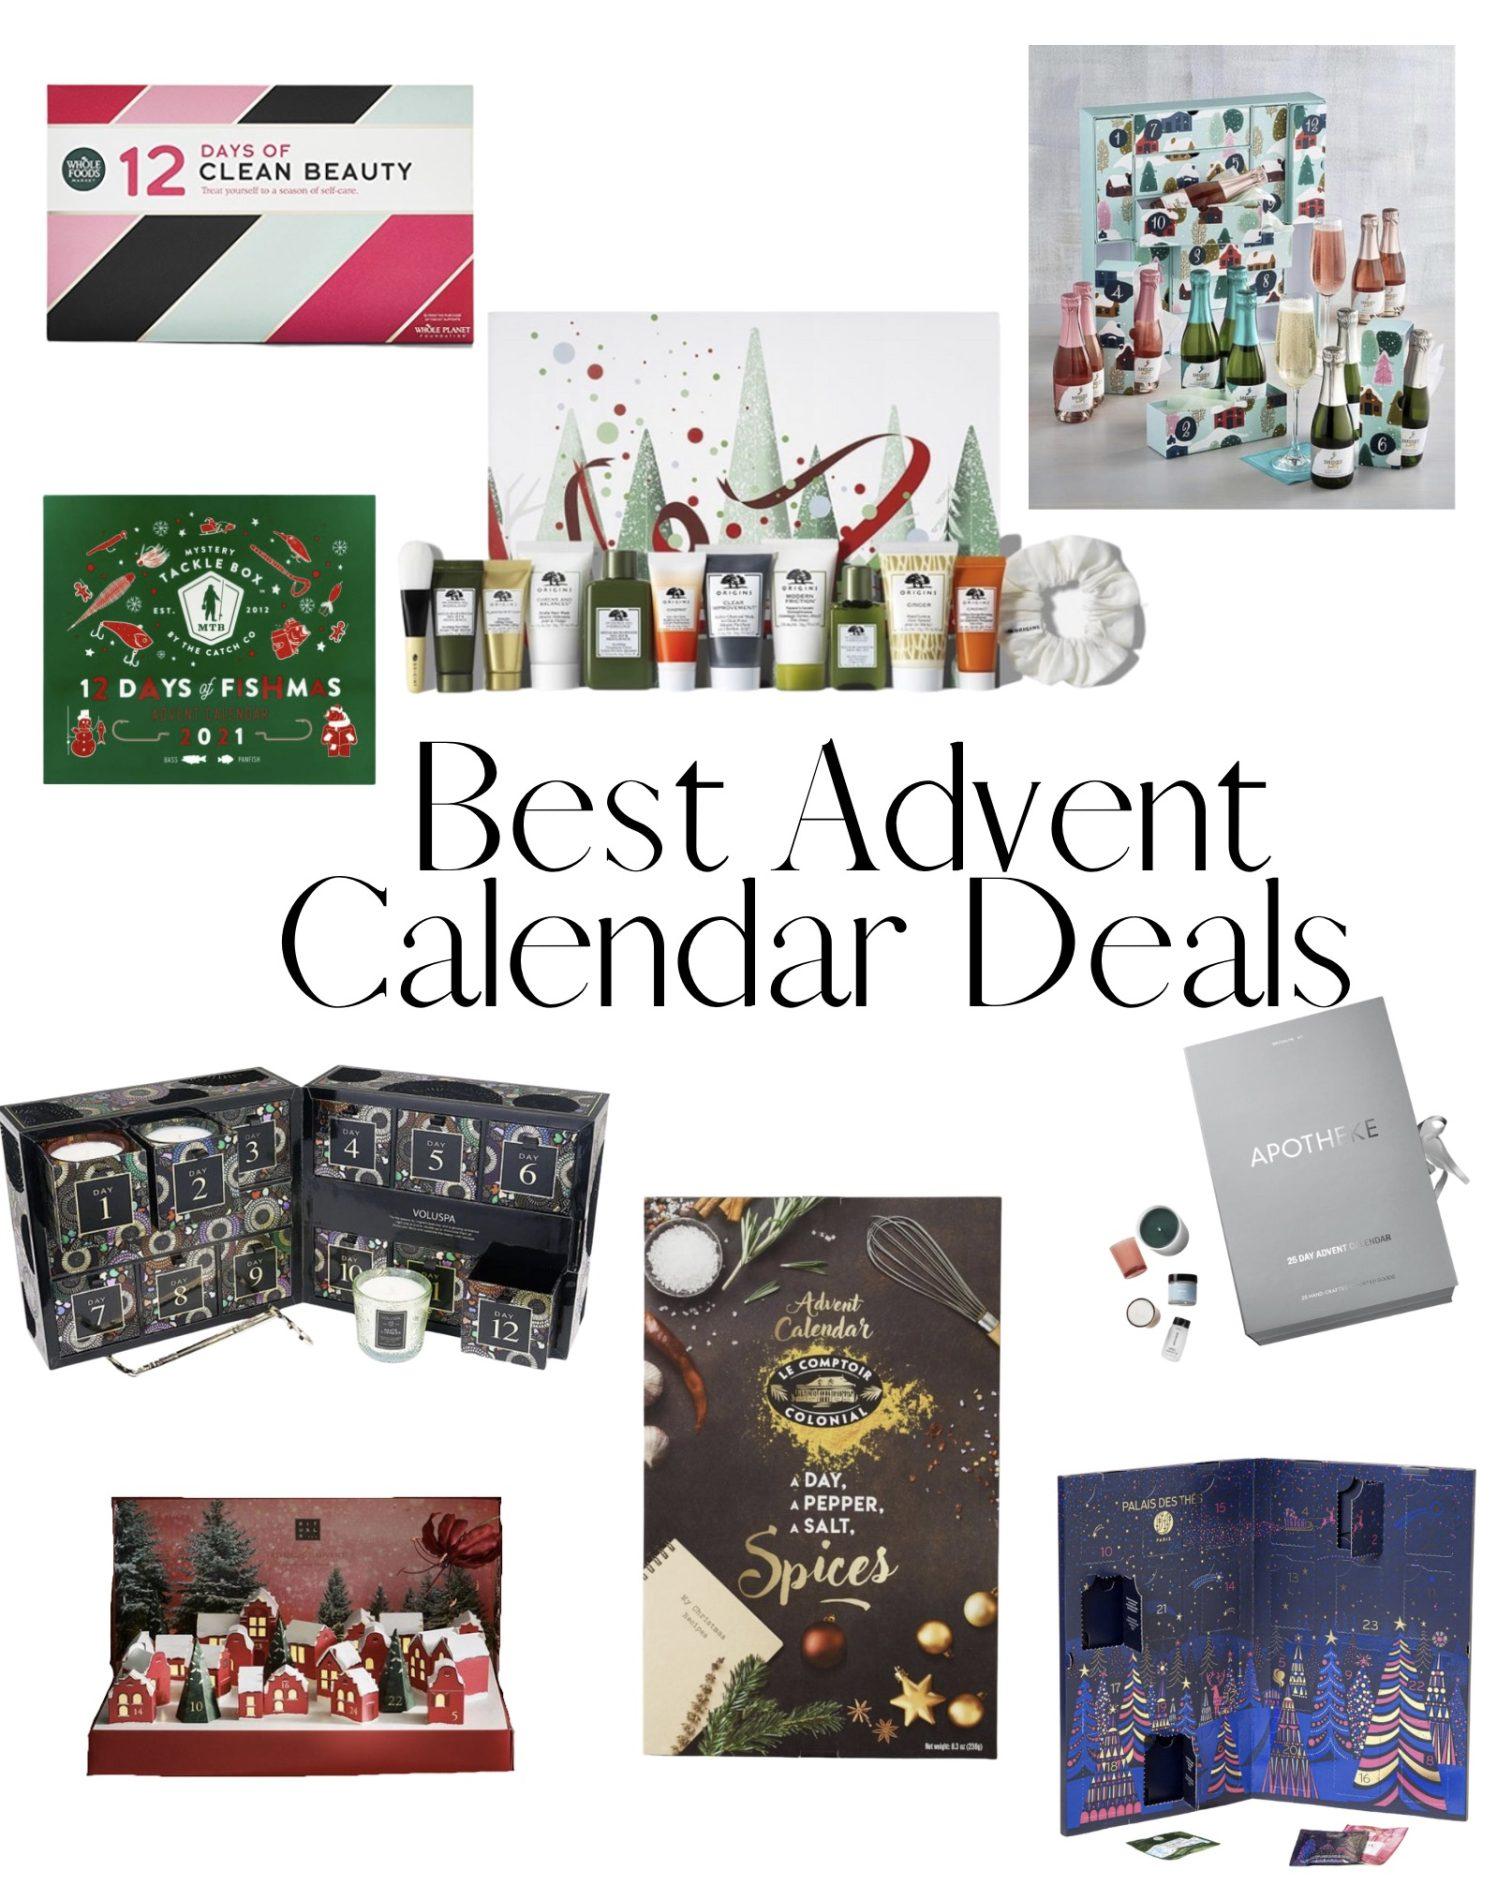 Best Advent Calendars on Sale / Clearance